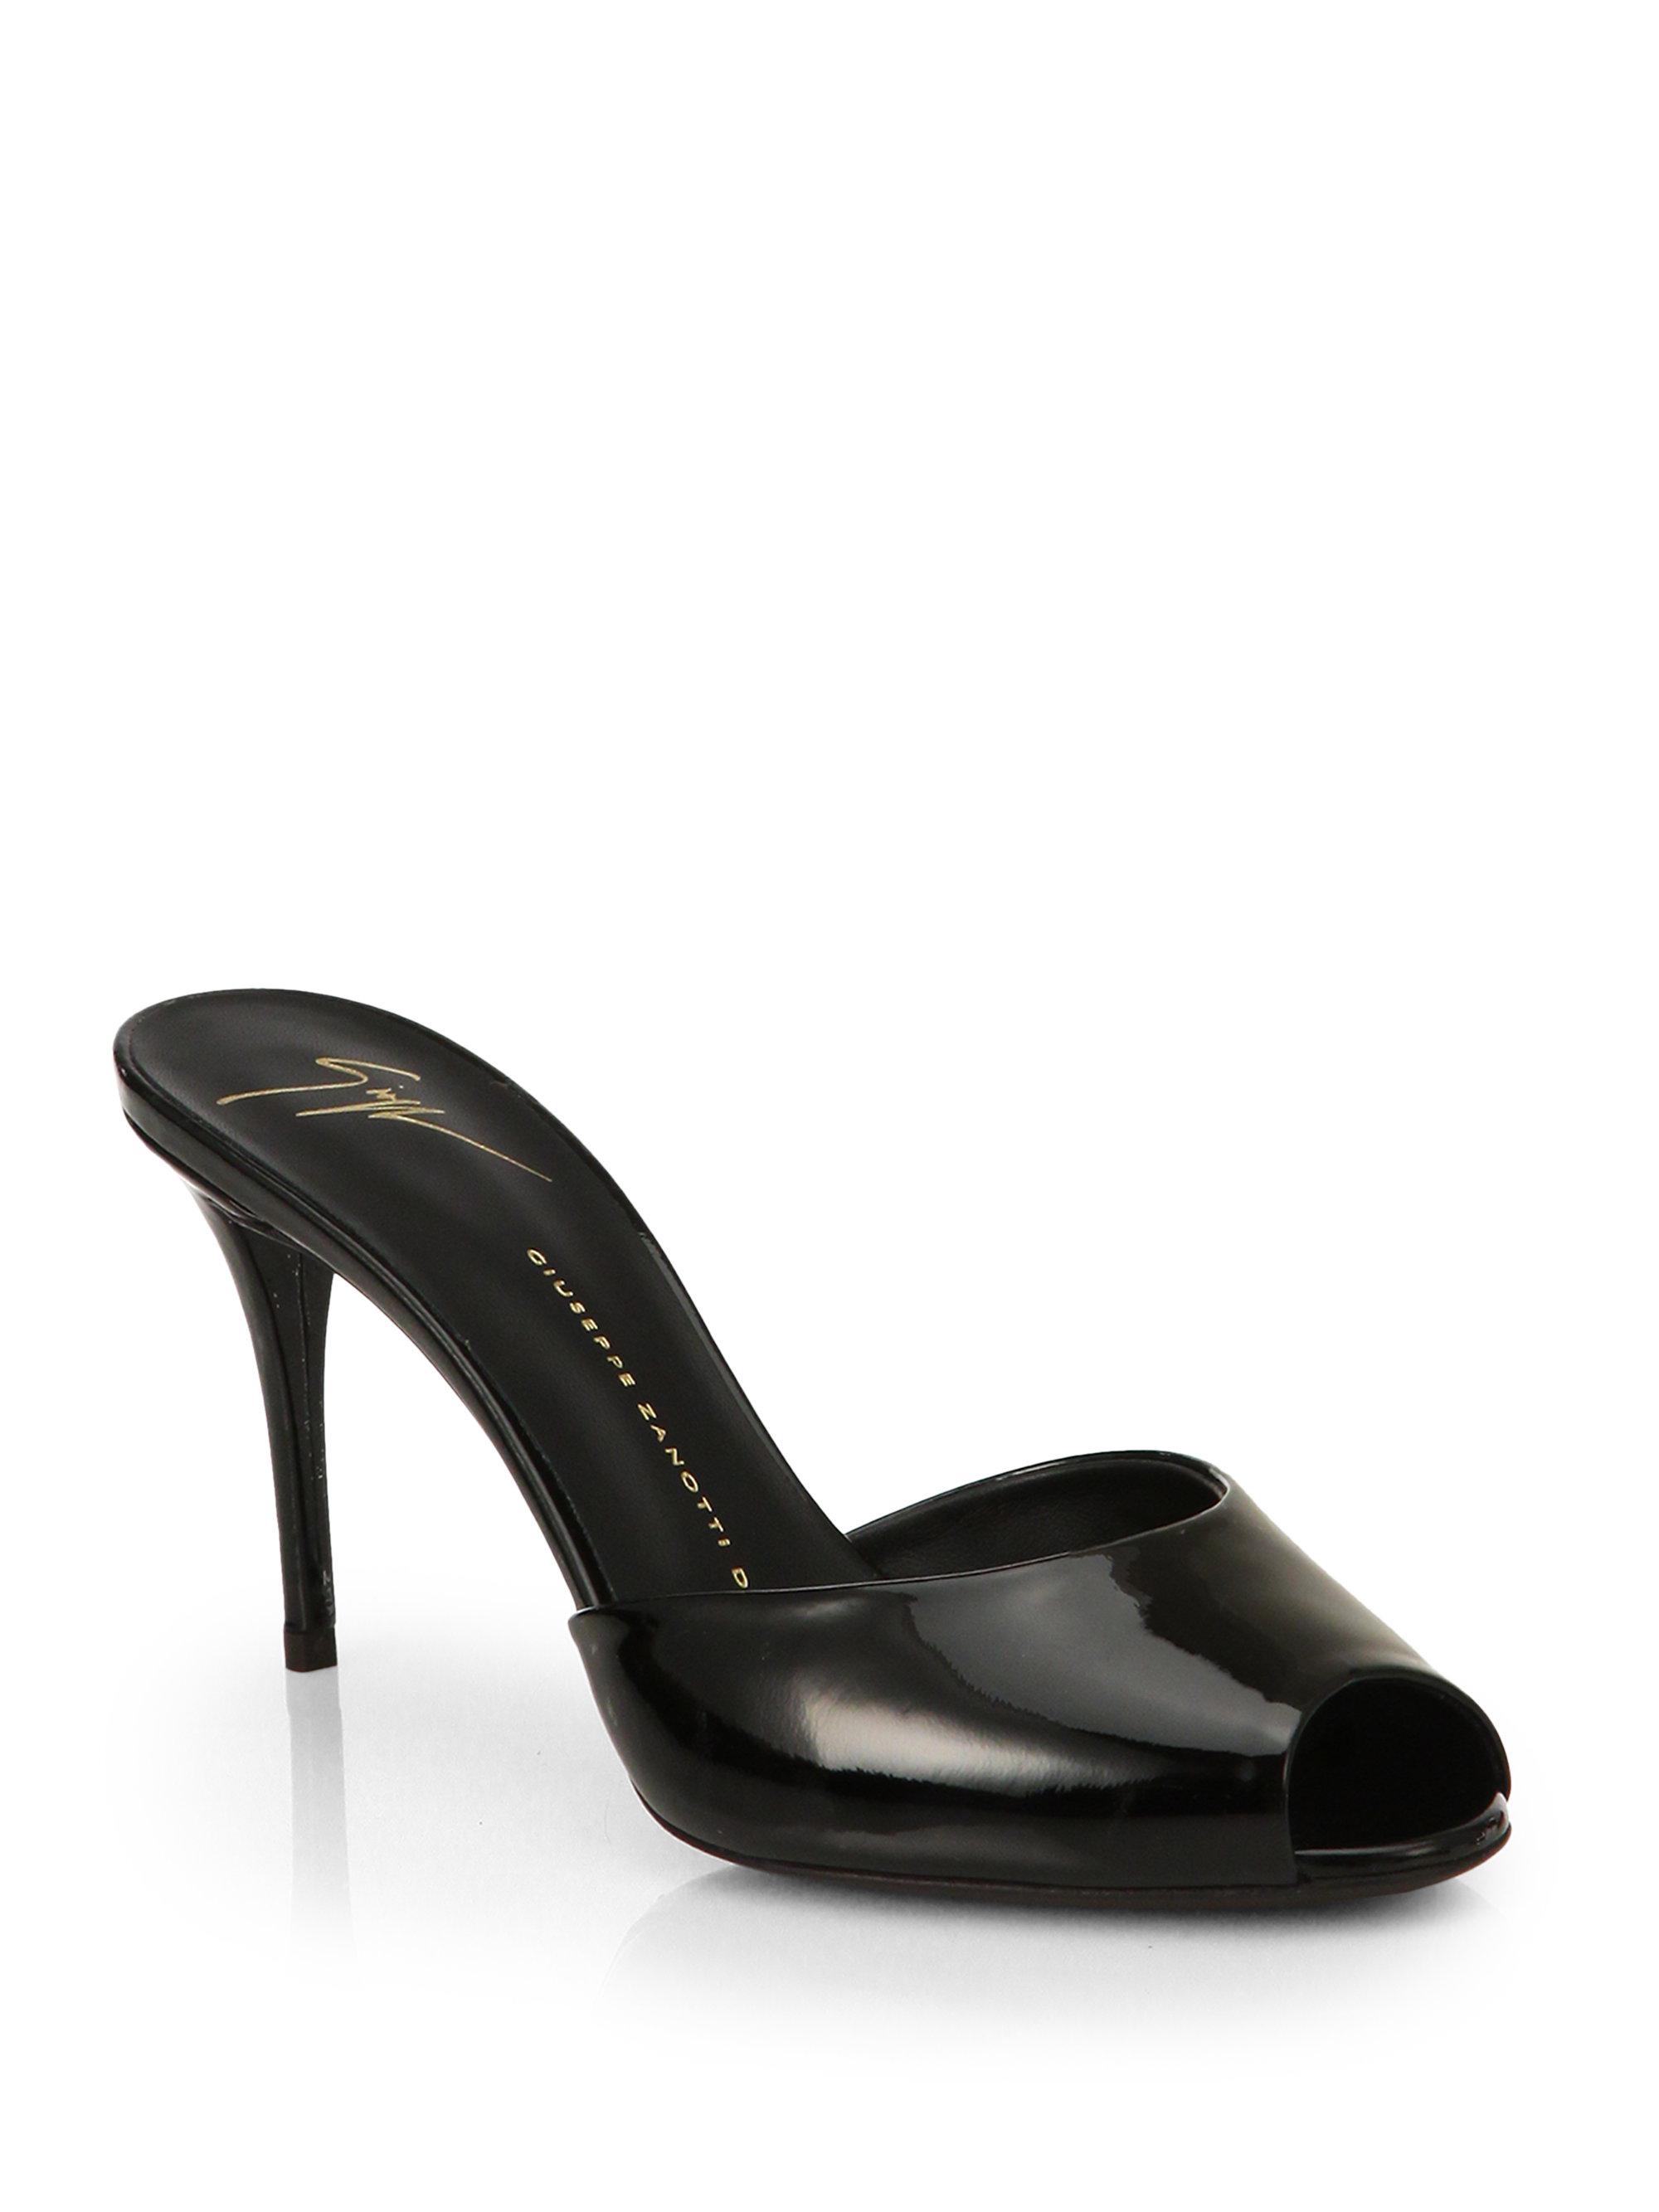 Giuseppe zanotti Patent Leather Mid-heel Mules in Black | Lyst